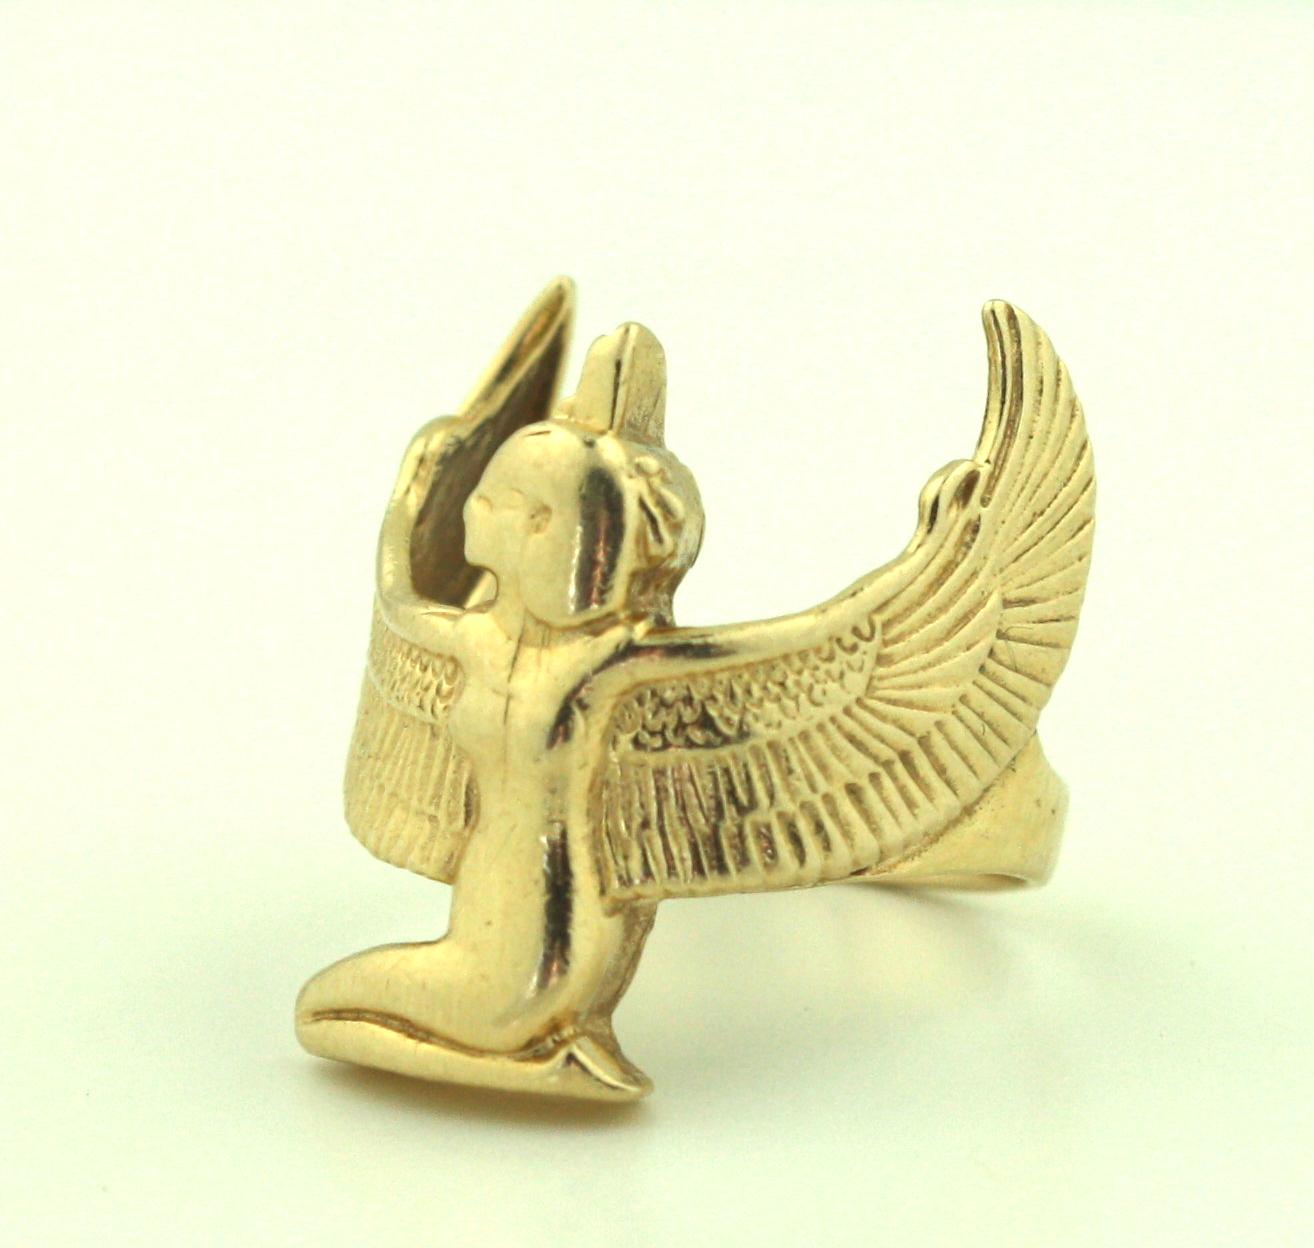 
An Egyptian Goddess ISIS 14 karat yellow Gold Ring,
size 6
gross weight 7.1 grams